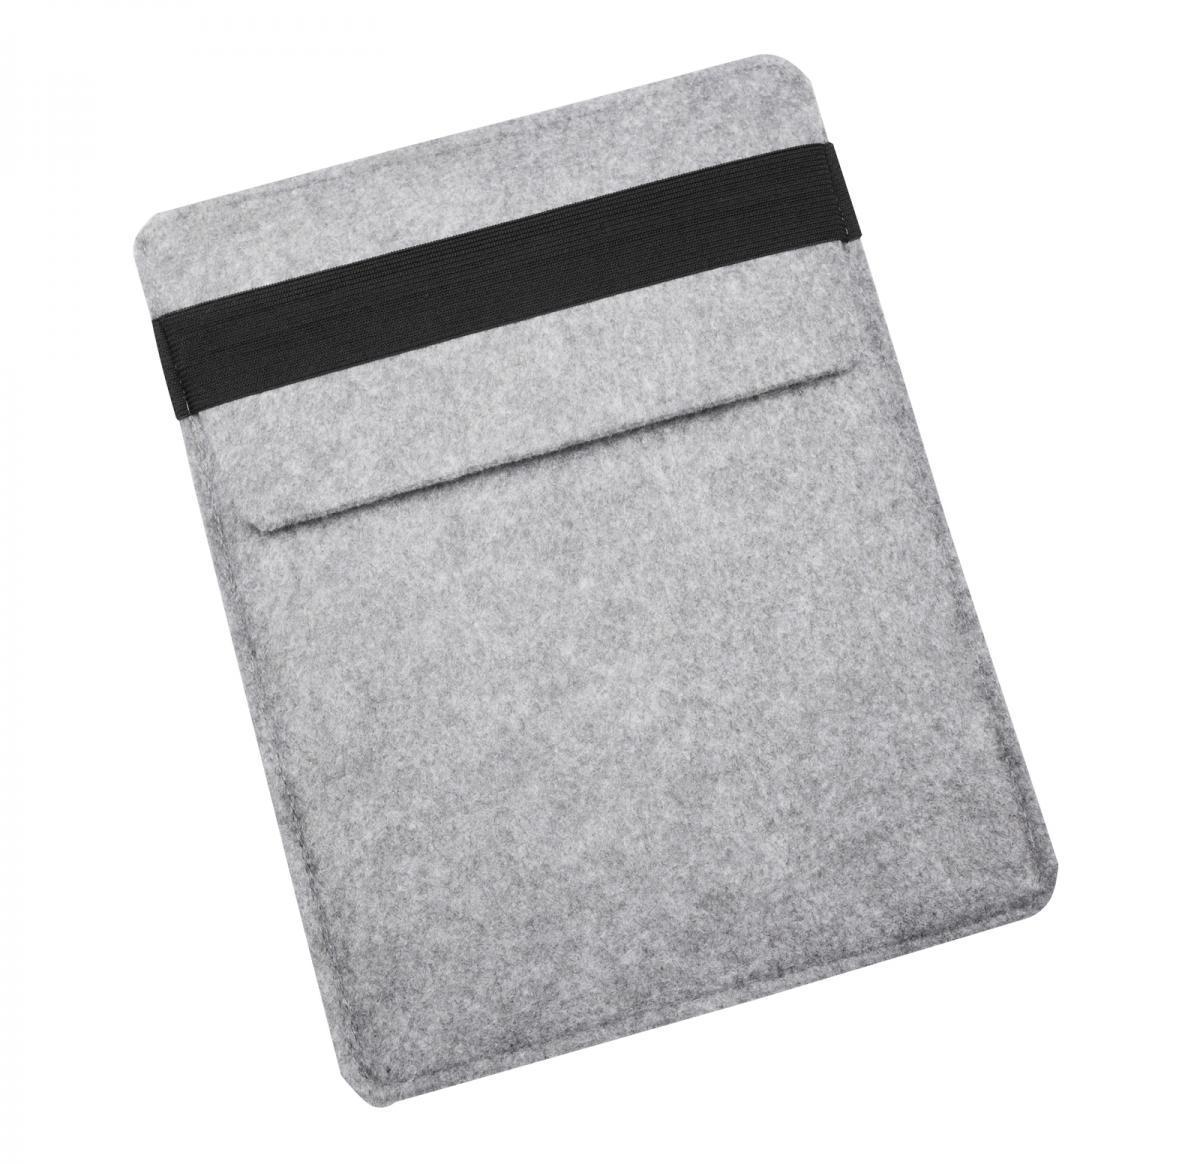 Promotional Felt Tablet / Computer Bags - Light Grey